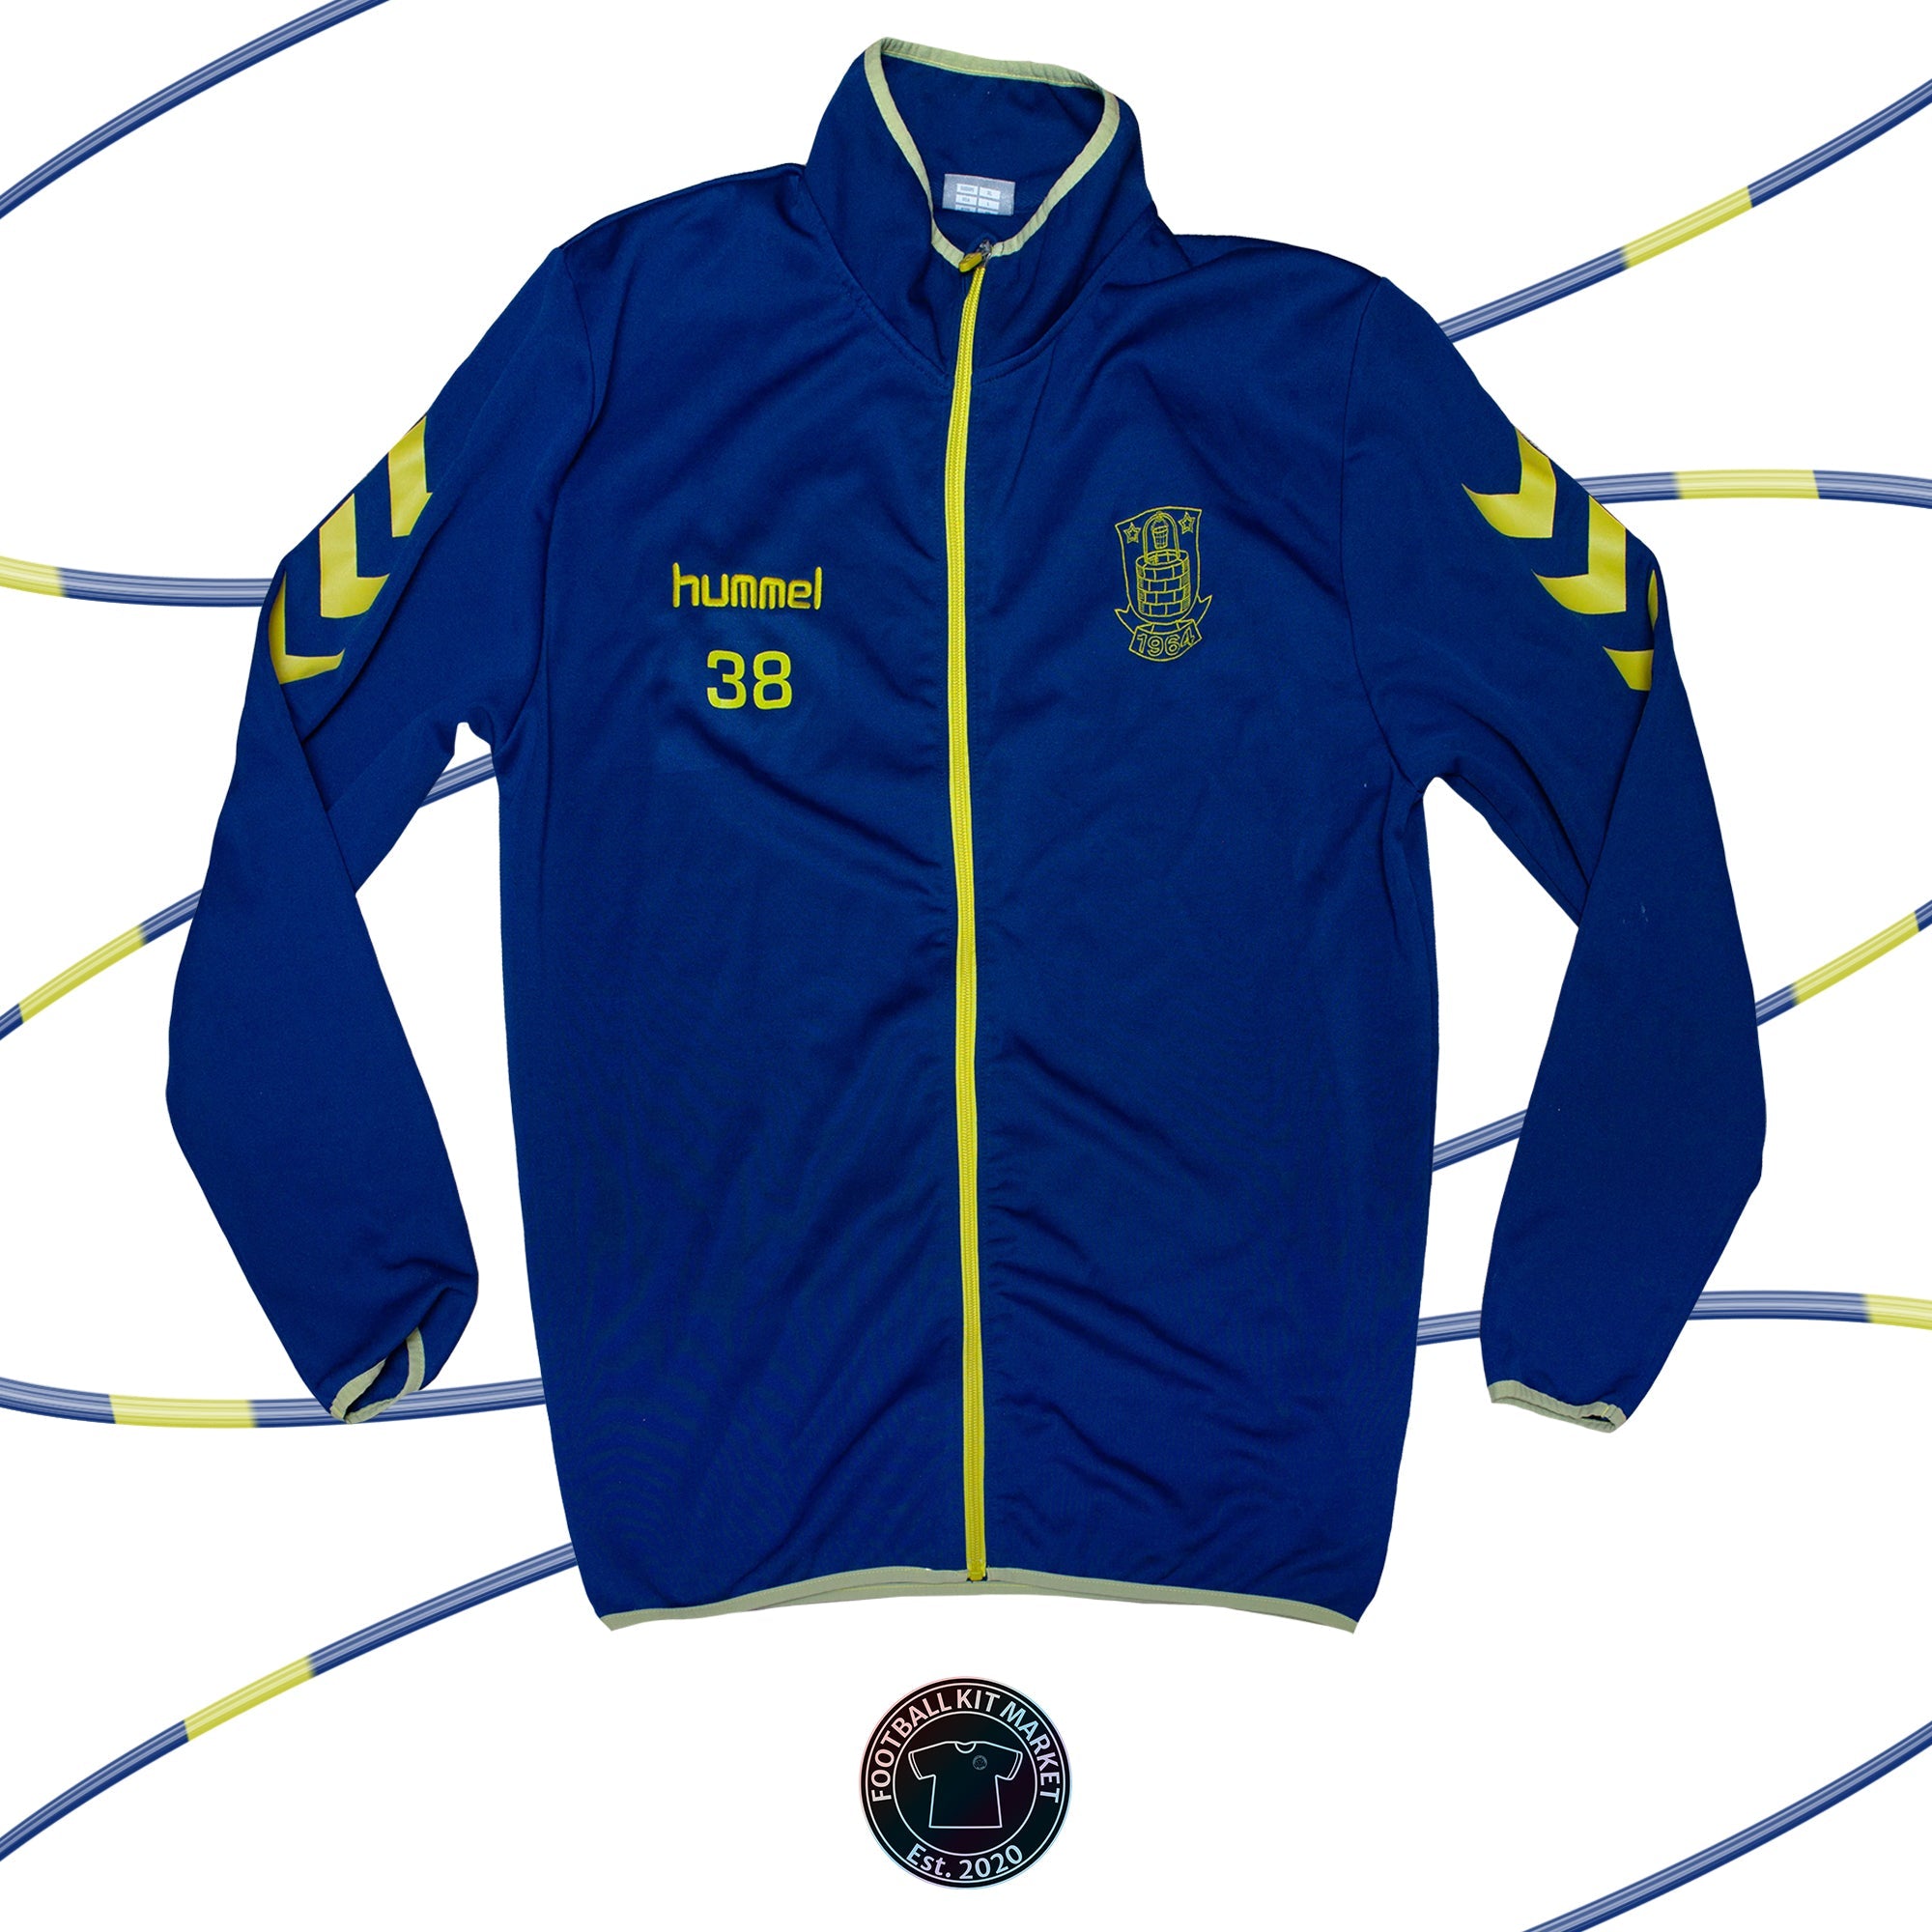 Genuine BRONDBY Jacket (2018-2019) - HUMMEL (XL) - Product Image from Football Kit Market